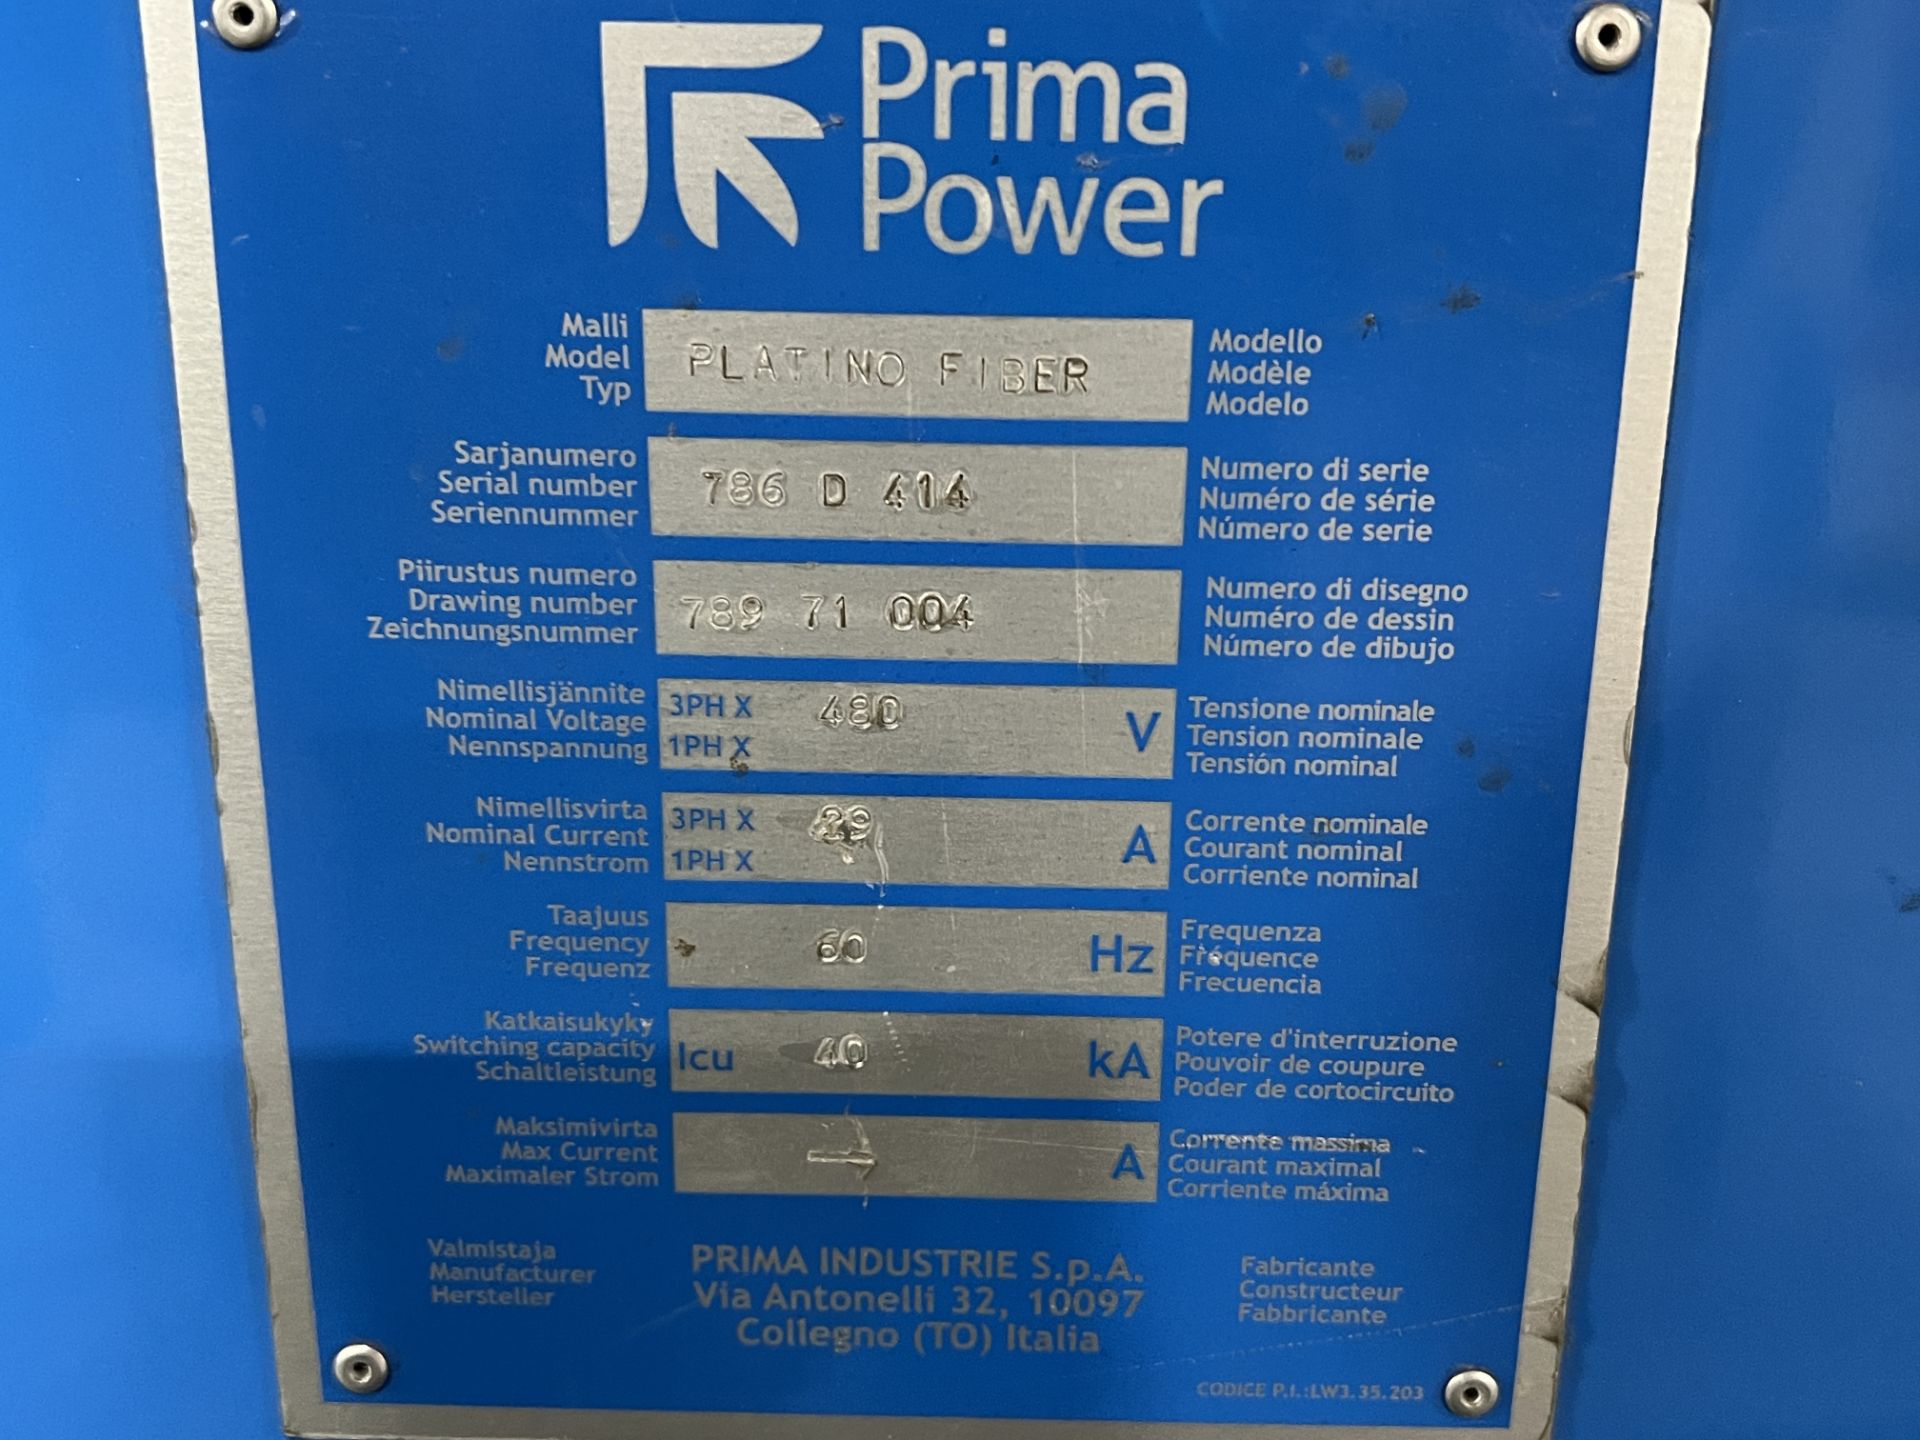 Prima Power Platino 2 kW CNC Fiber Laser, S/N 786D414, 2013 - Image 24 of 28